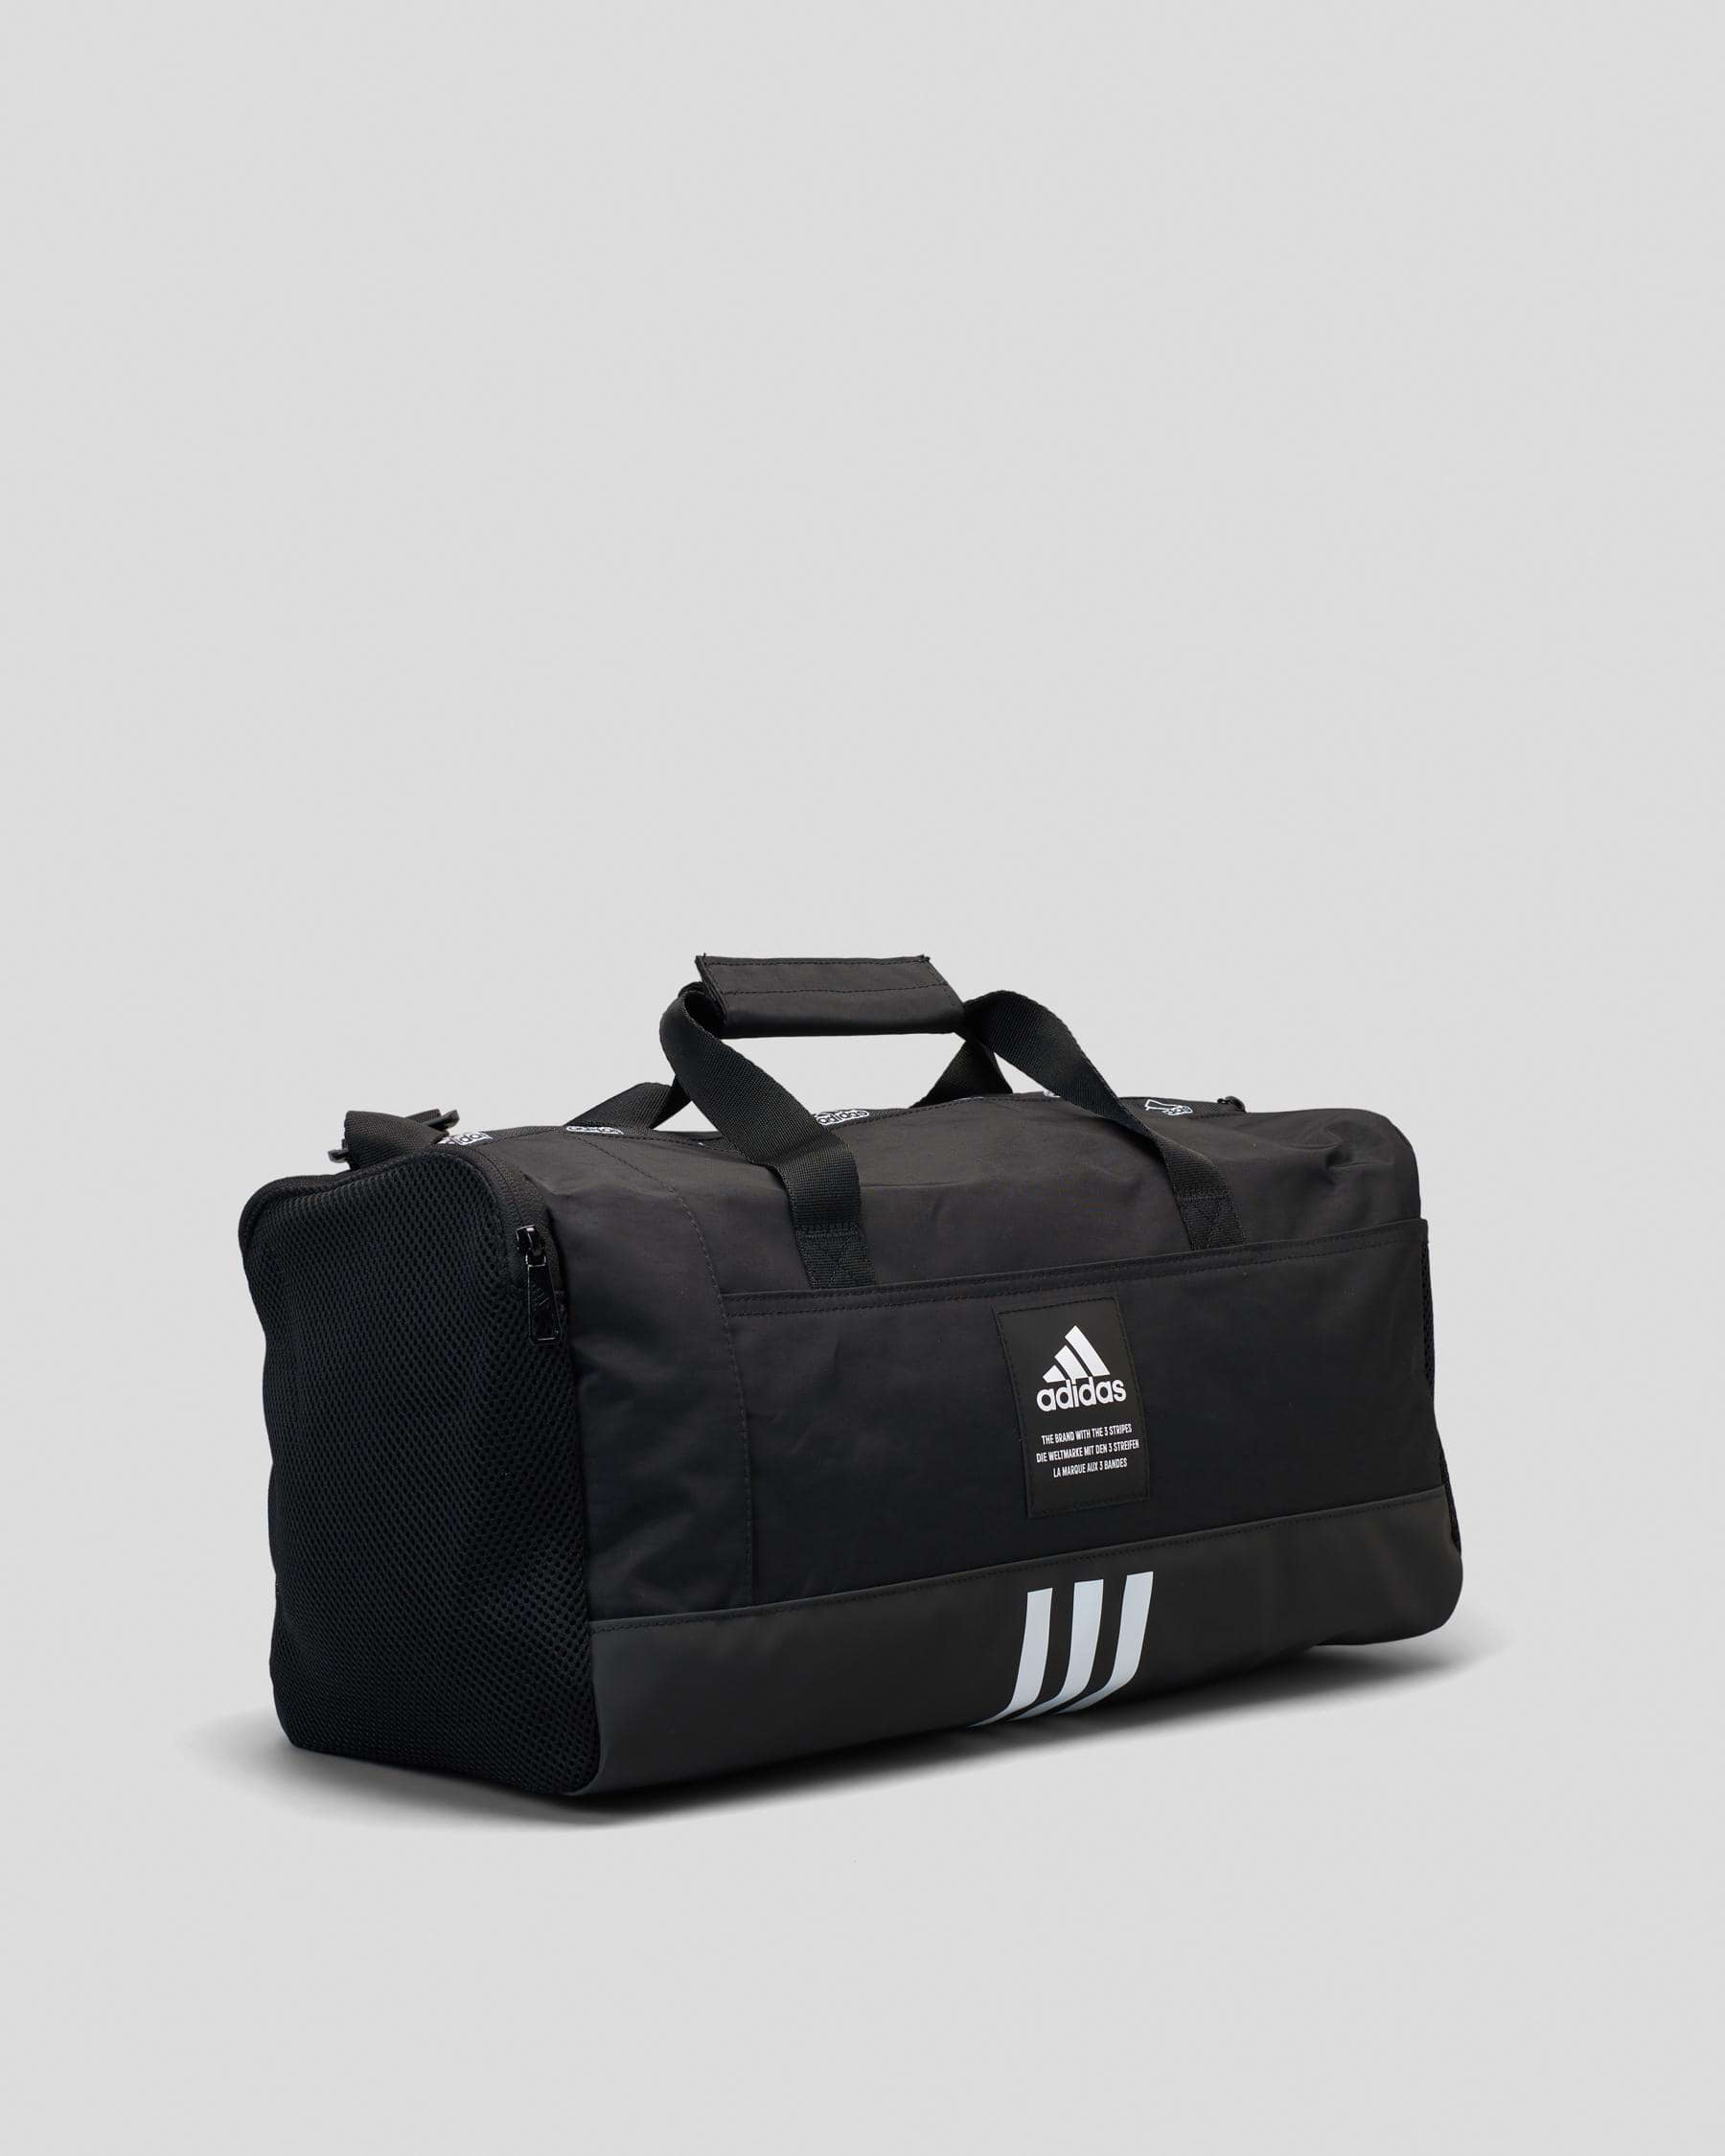 Adidas Athletes Gym Bag In Black/black - Fast Shipping & Easy Returns ...